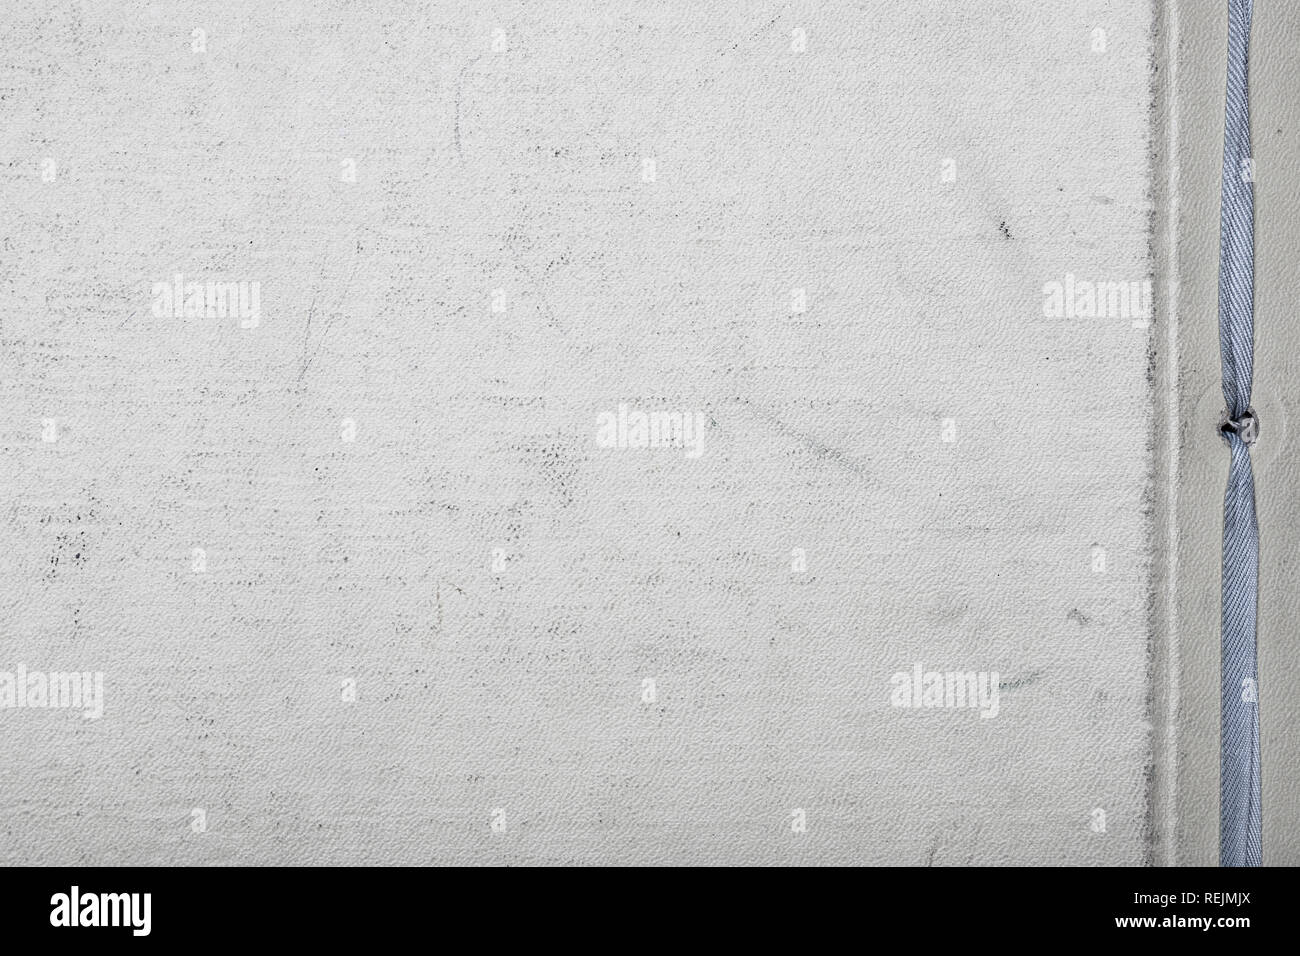 Grey paper background Stock Photo by ©chamkerten 116543676